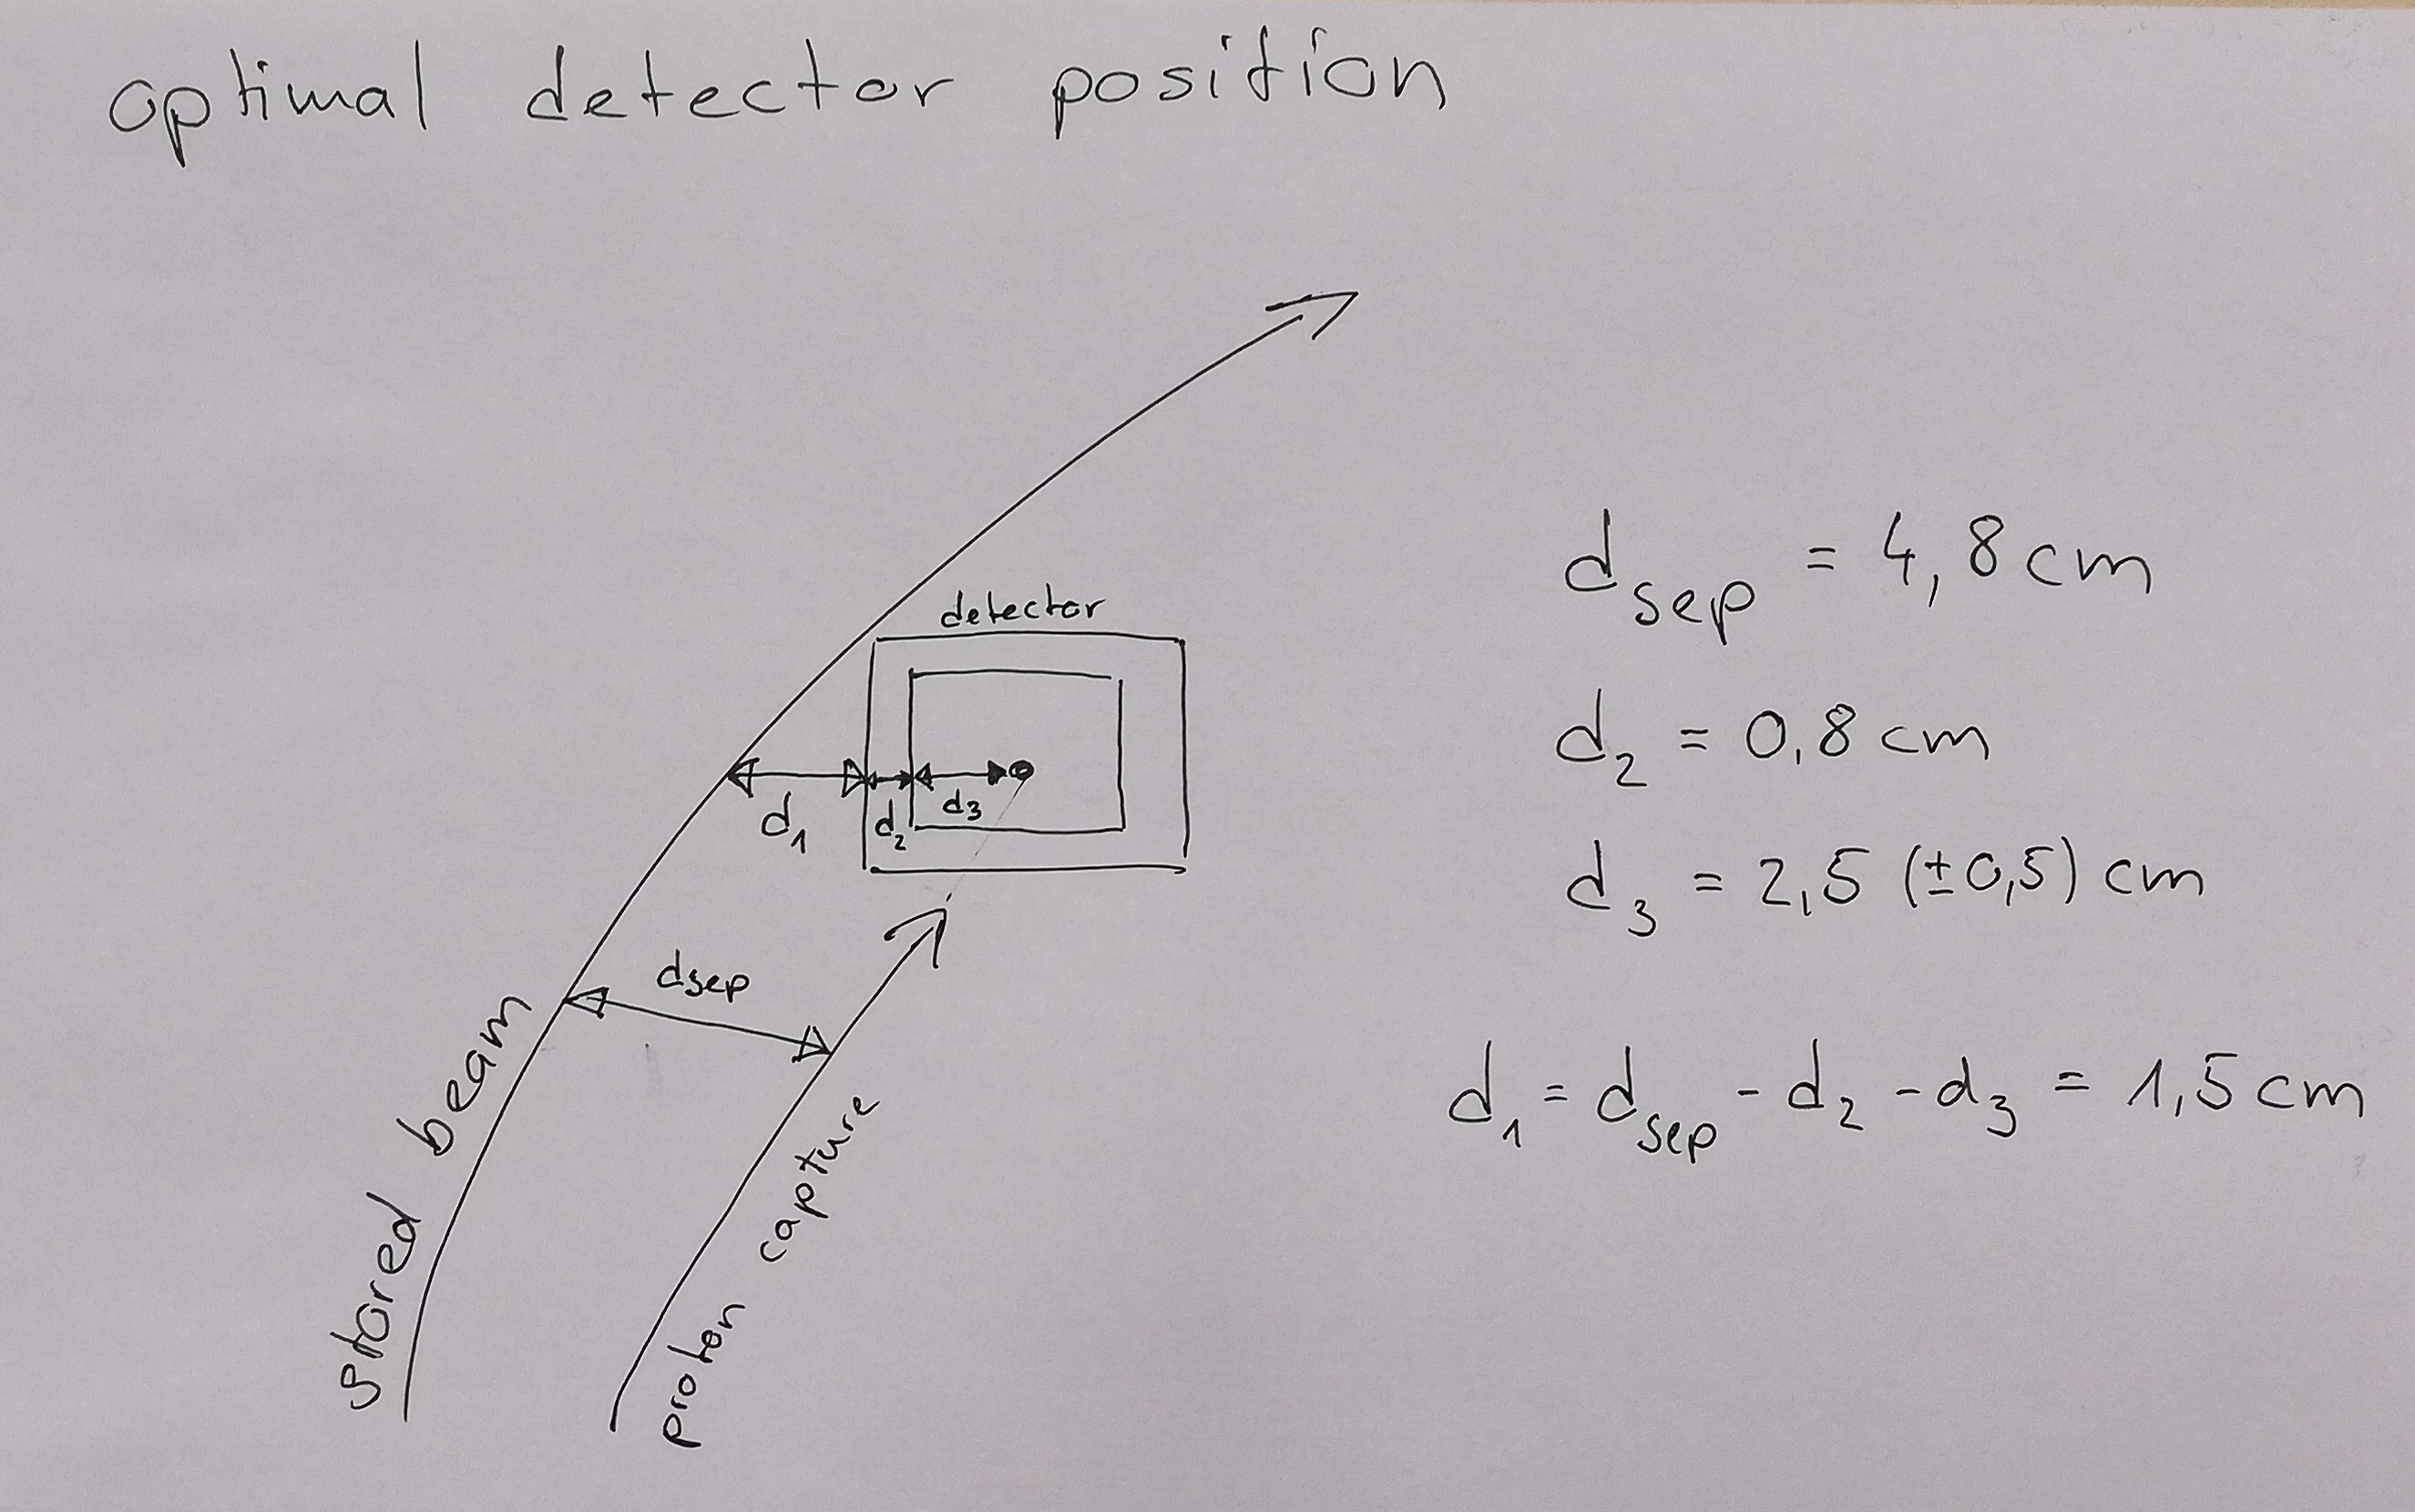 optimum_detector_position_2.jpg